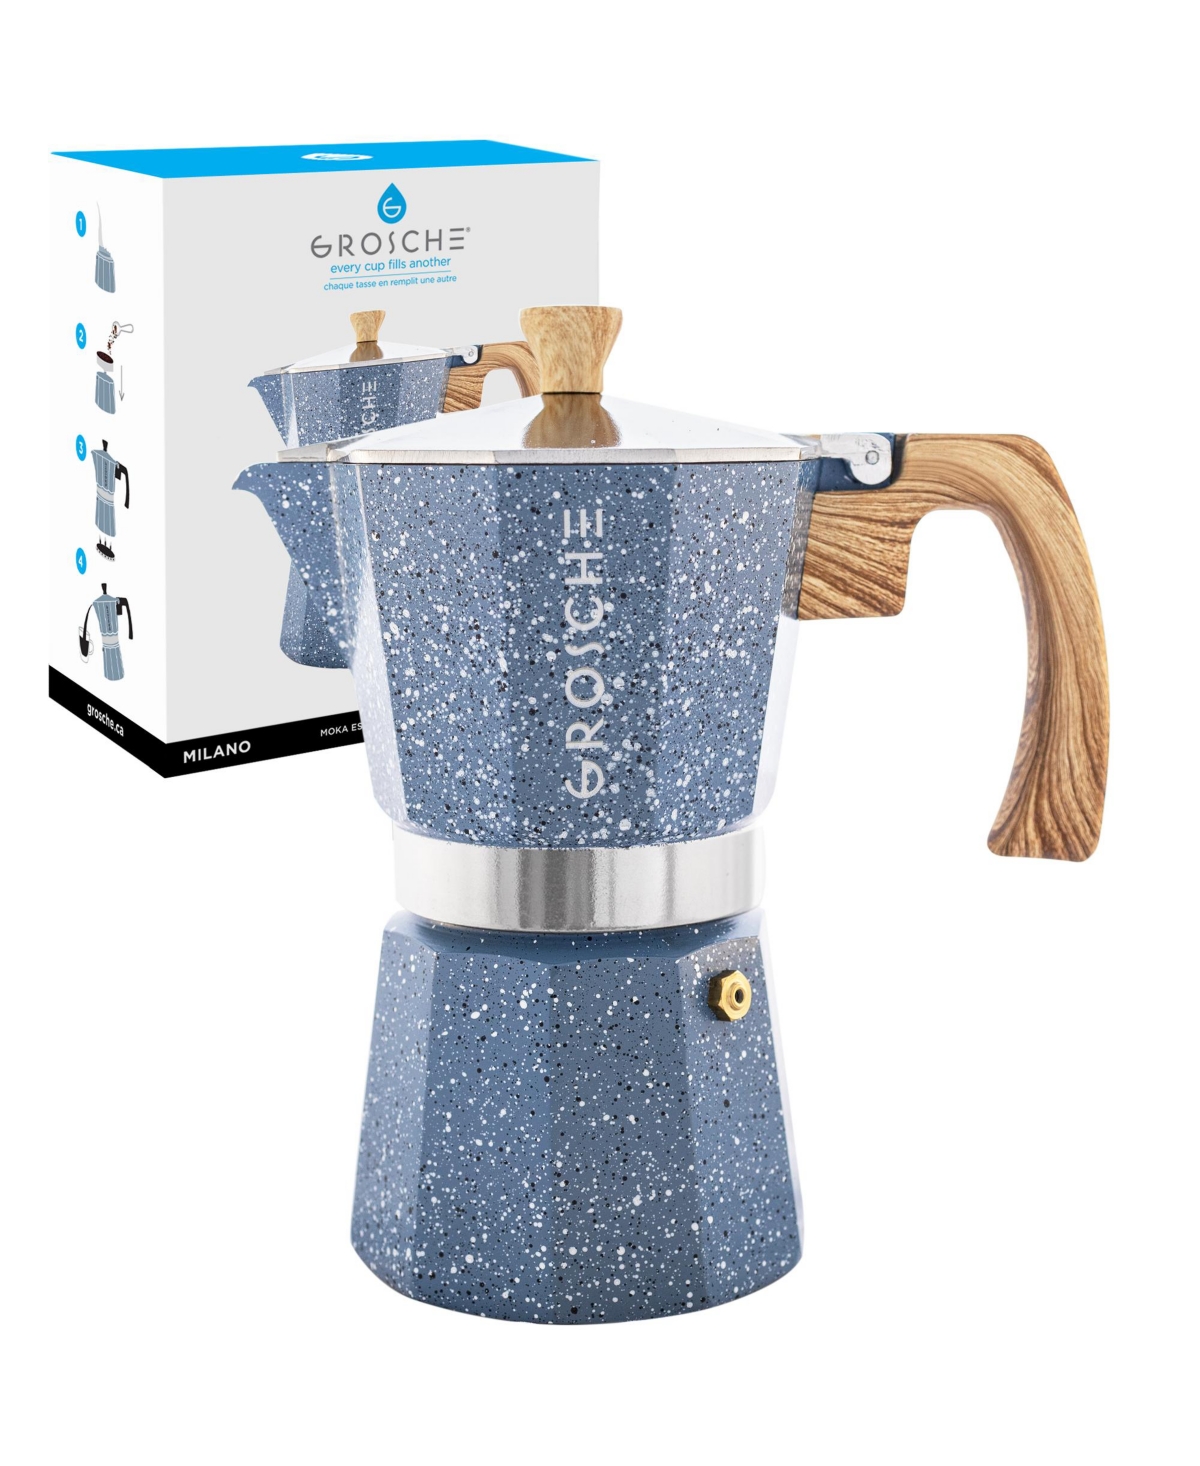 Grosche Milano Stone Stovetop Espresso Maker Moka Pot 12 Cup, 23.6 oz In Indigo Blue